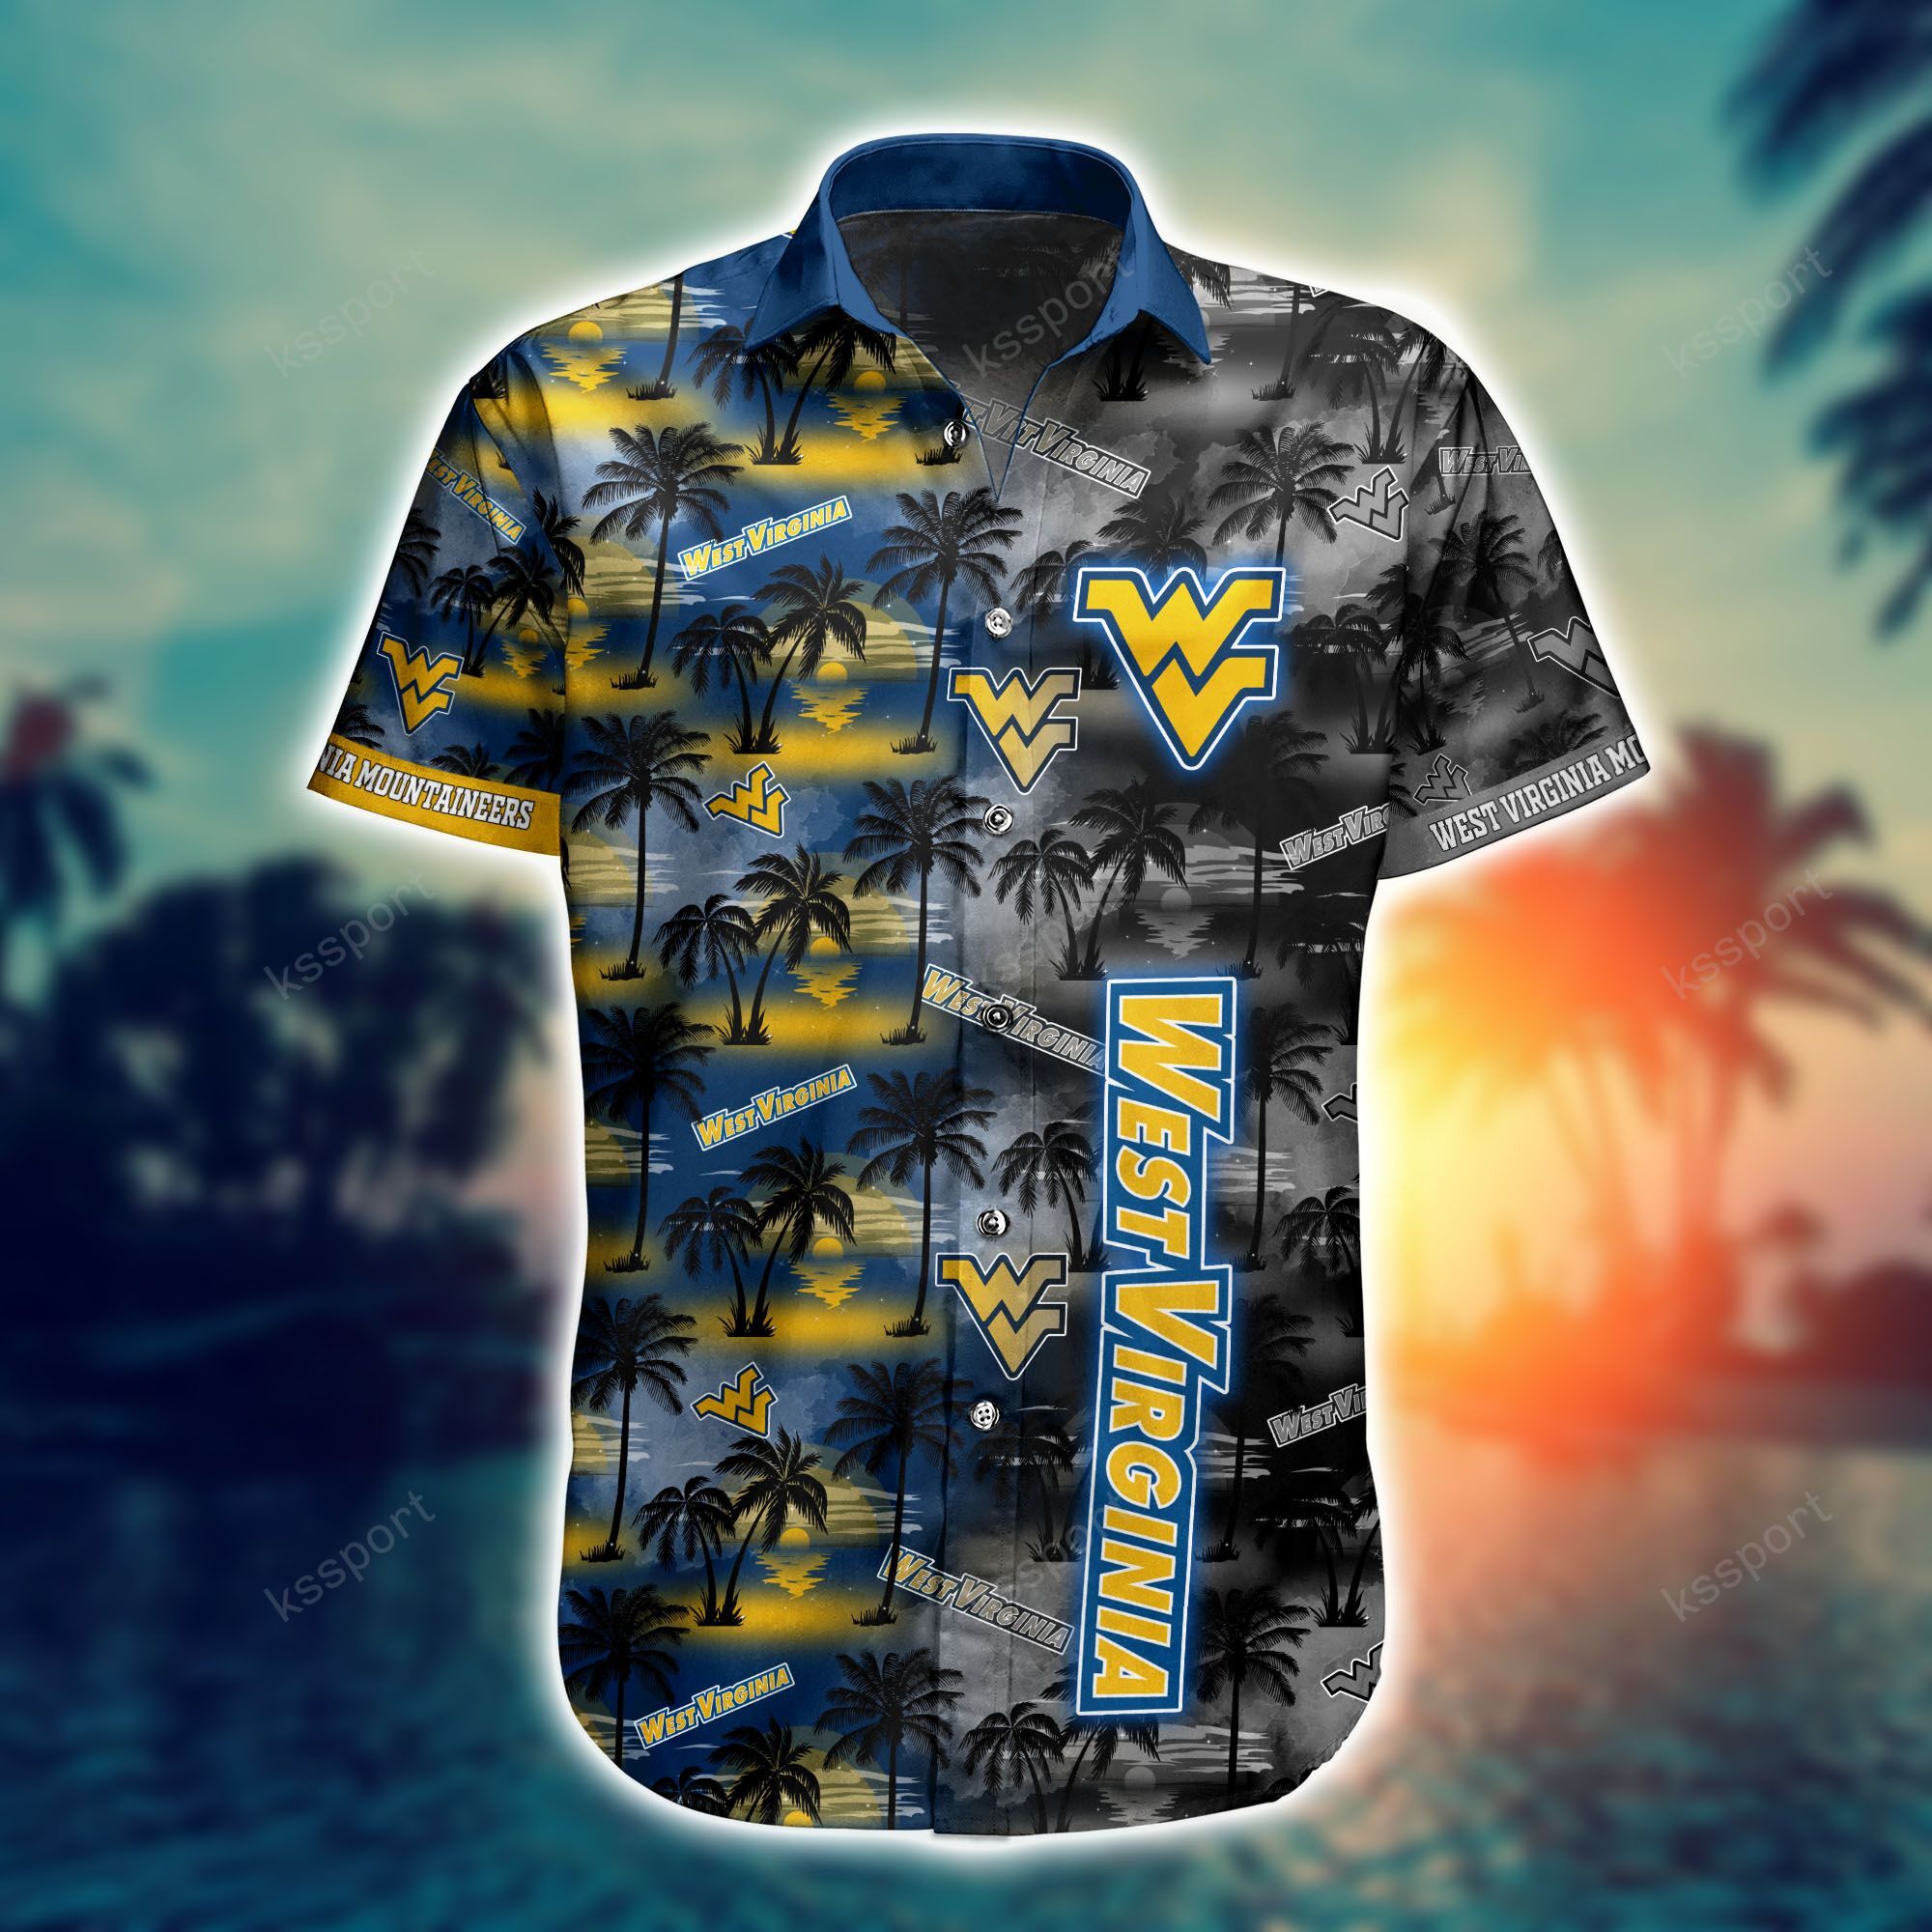 Hawaiian shirt and shorts is a great way to look stylish at a beach party 111